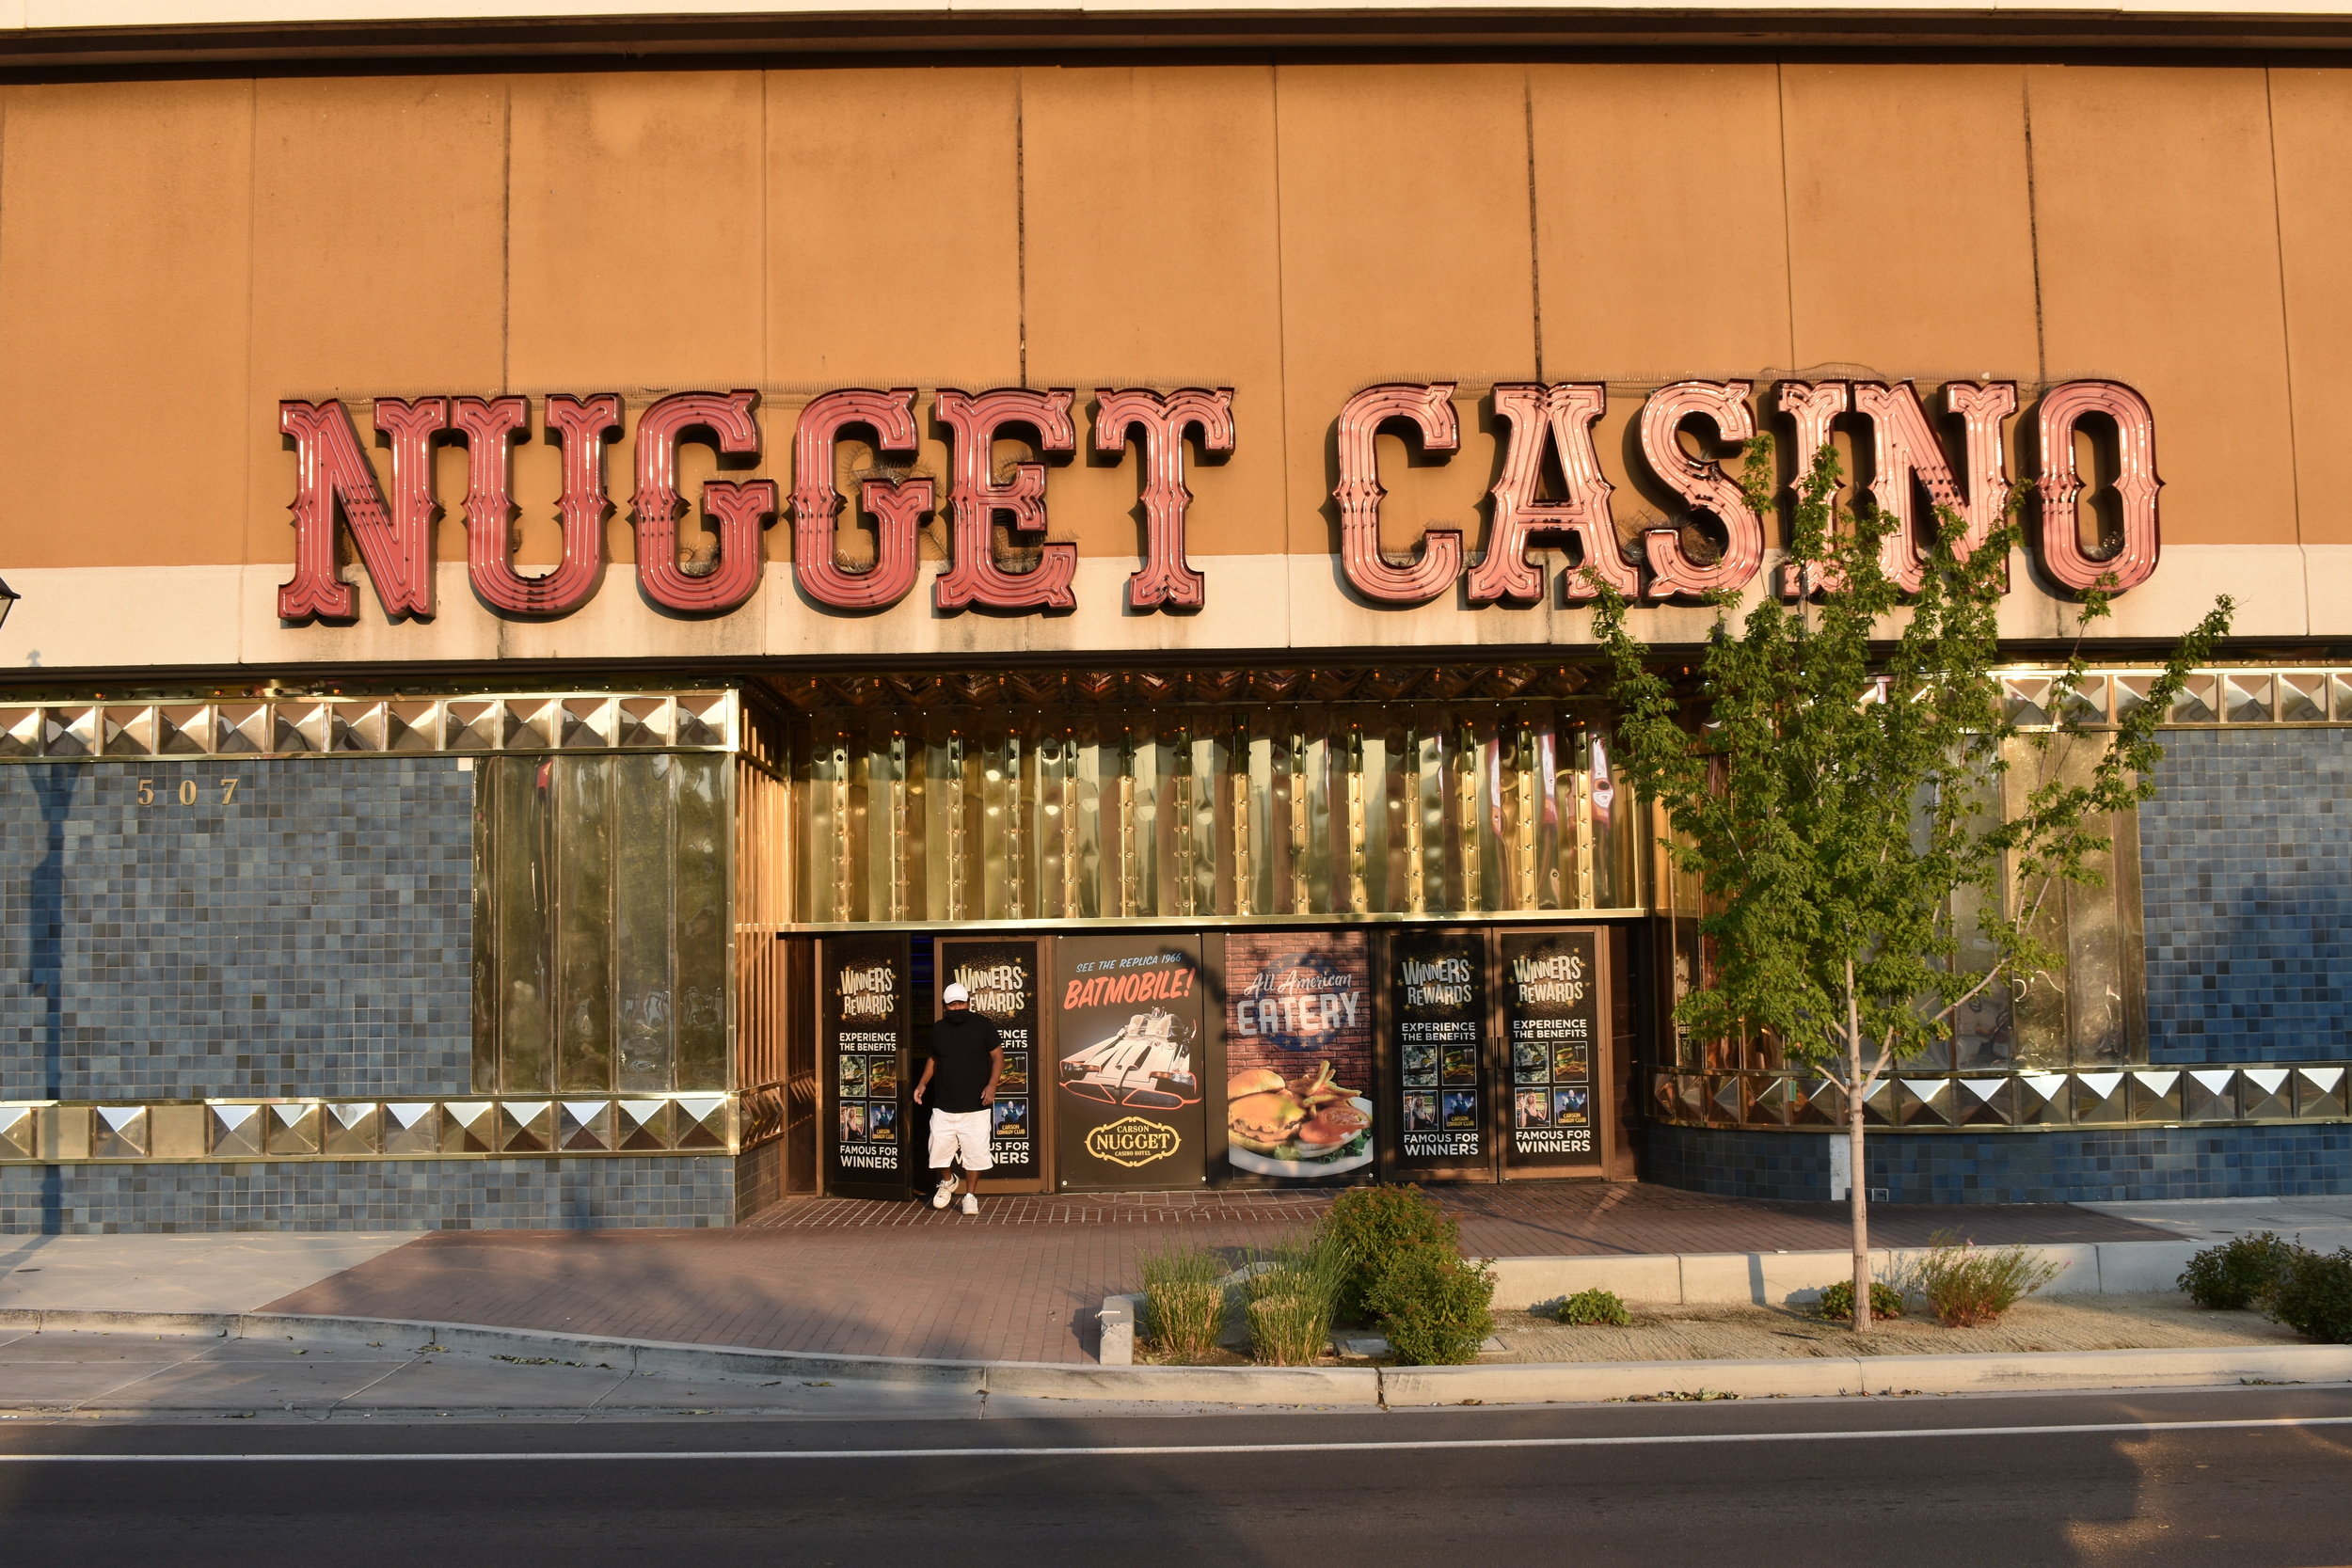 Carson nugget wall mounted casino sign, Carson City, Nevada